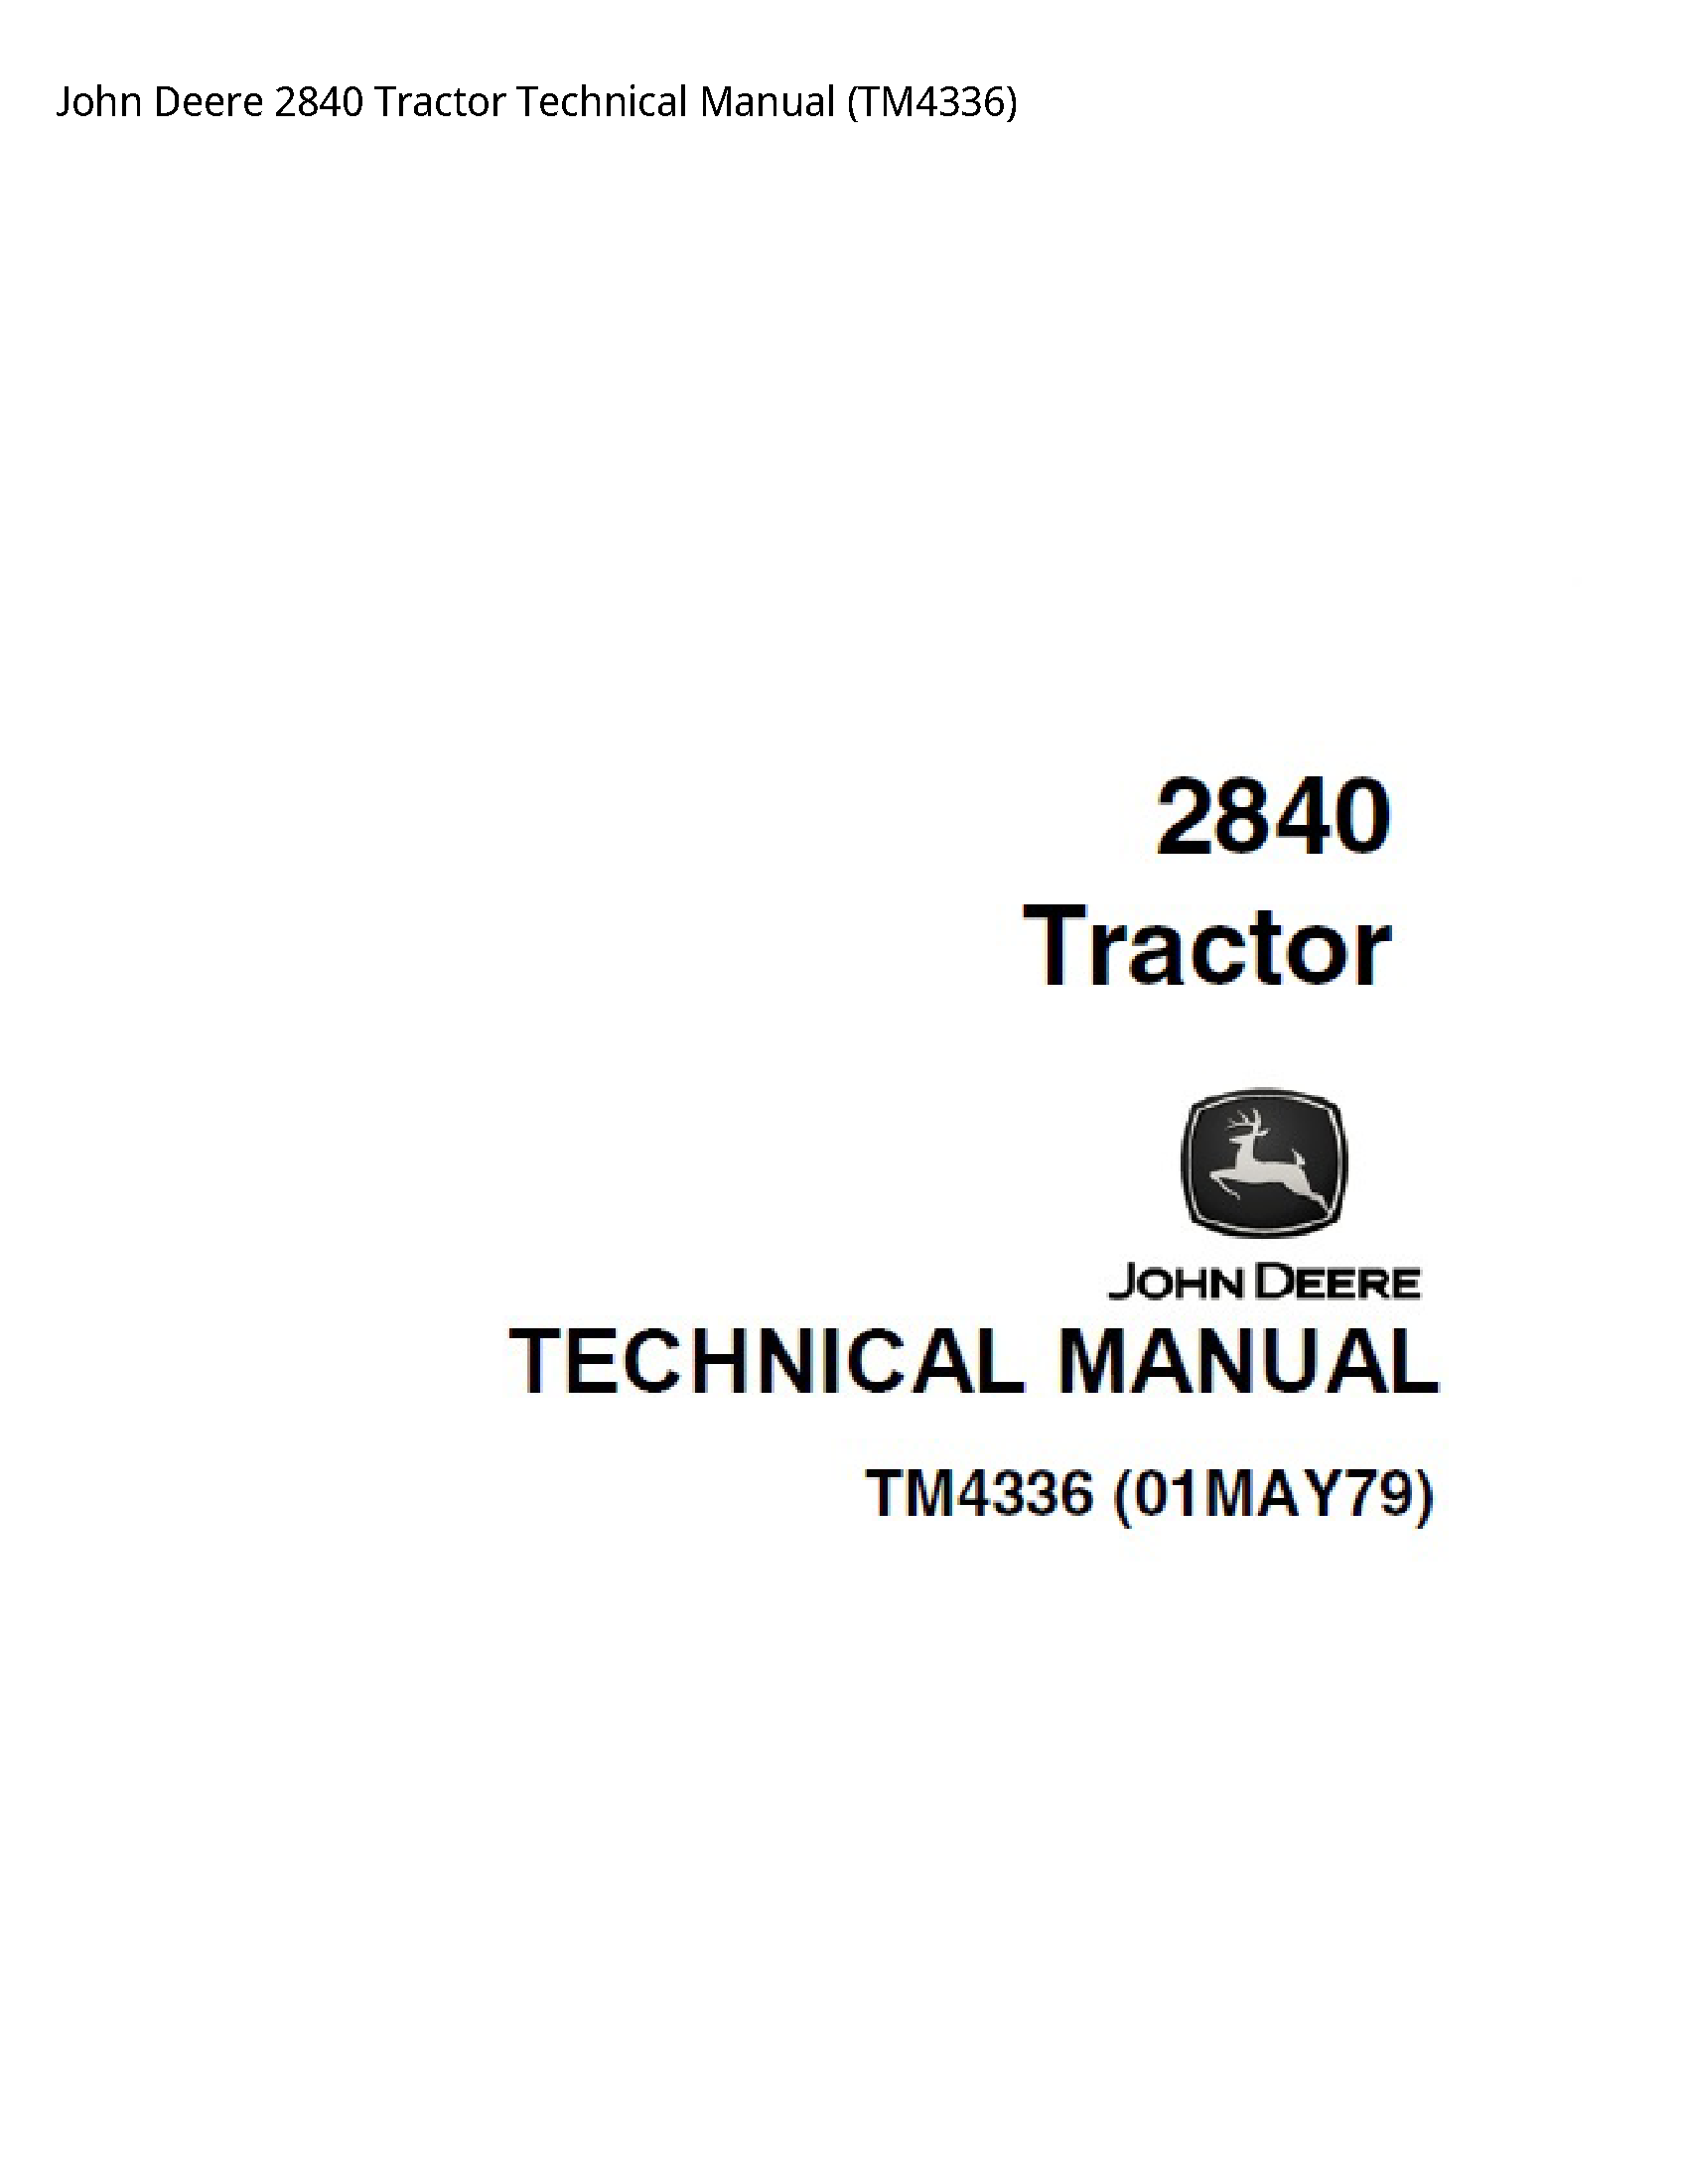 John Deere 2840 Tractor Technical manual